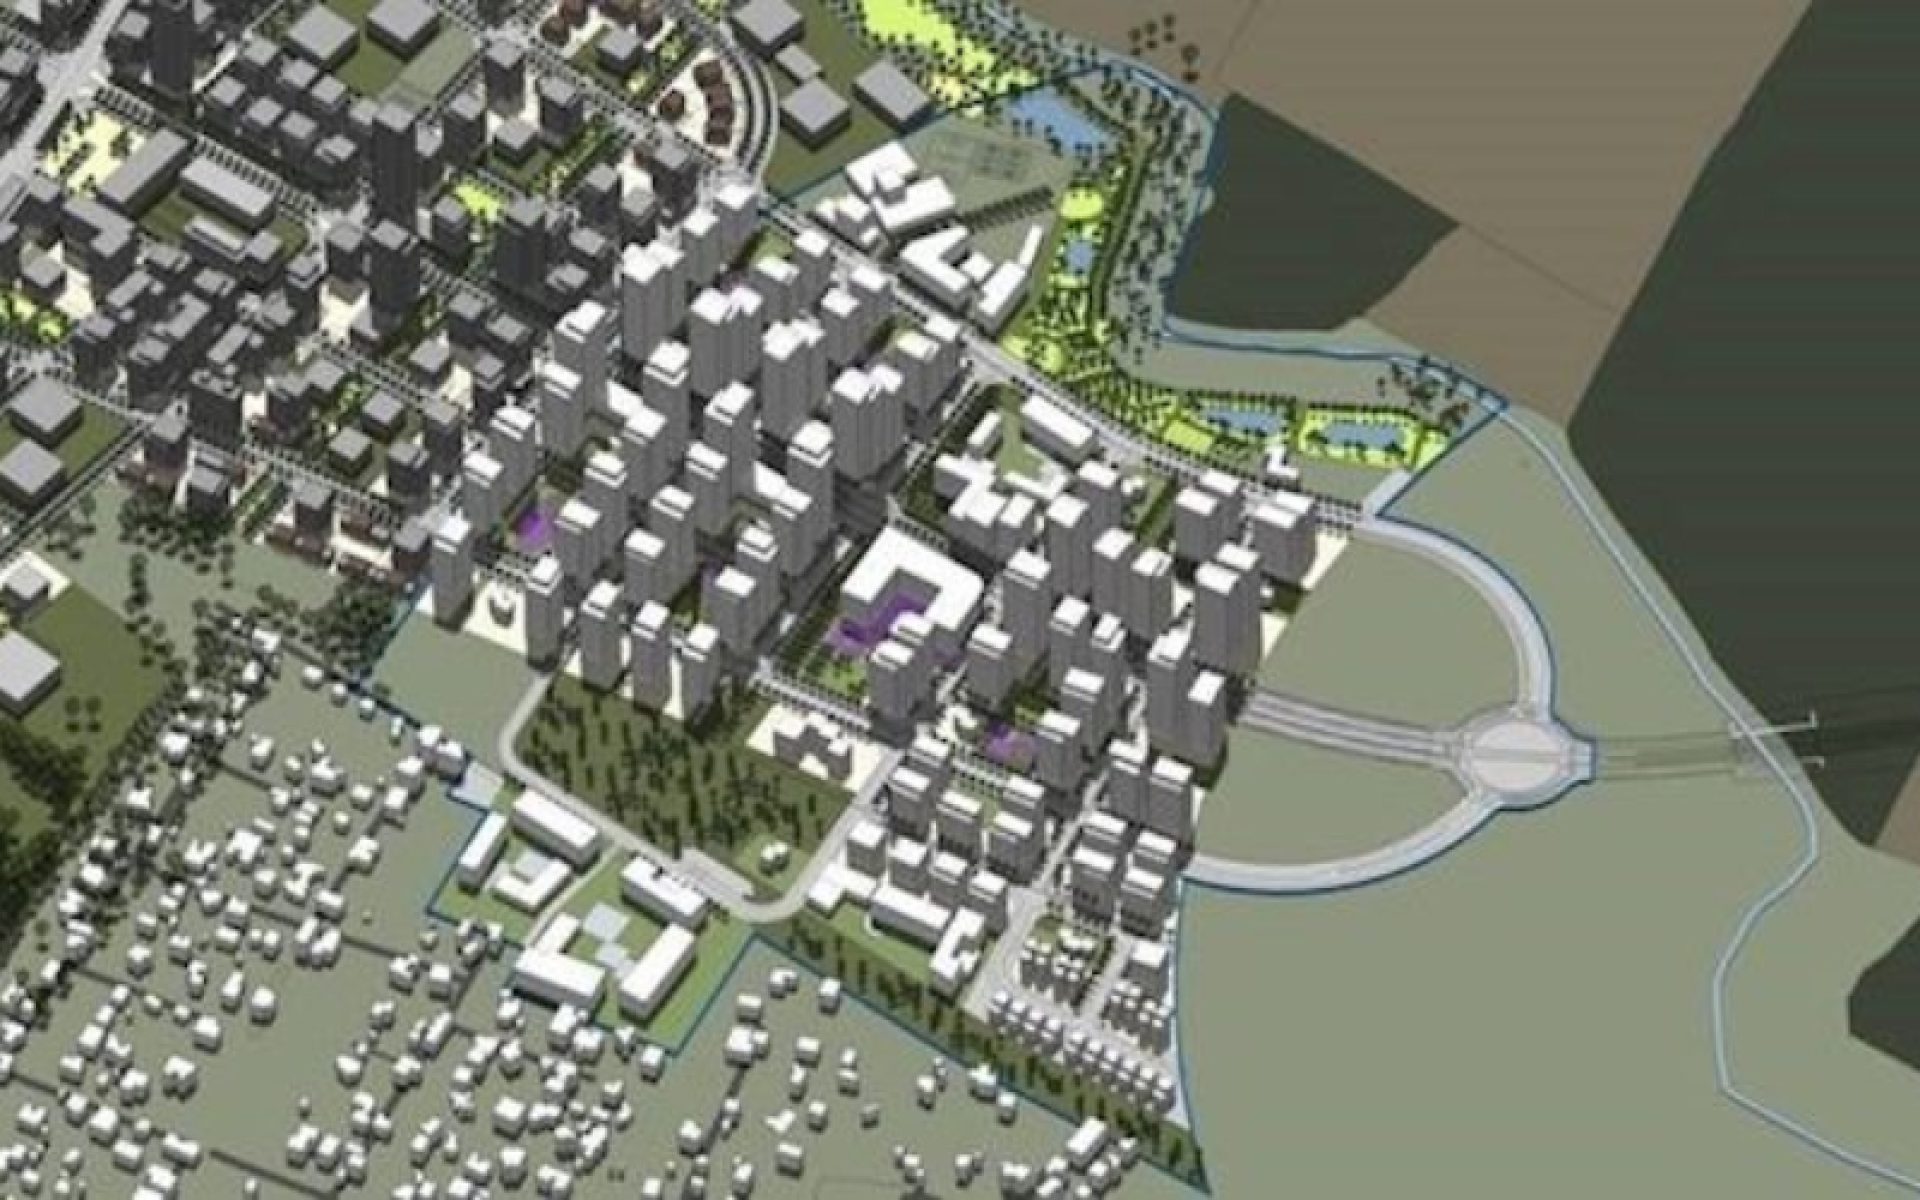 סירקין מזרח קרדיט שרד עמוס ברנדייס אדריכלות ותכנון עירוני ואזורי